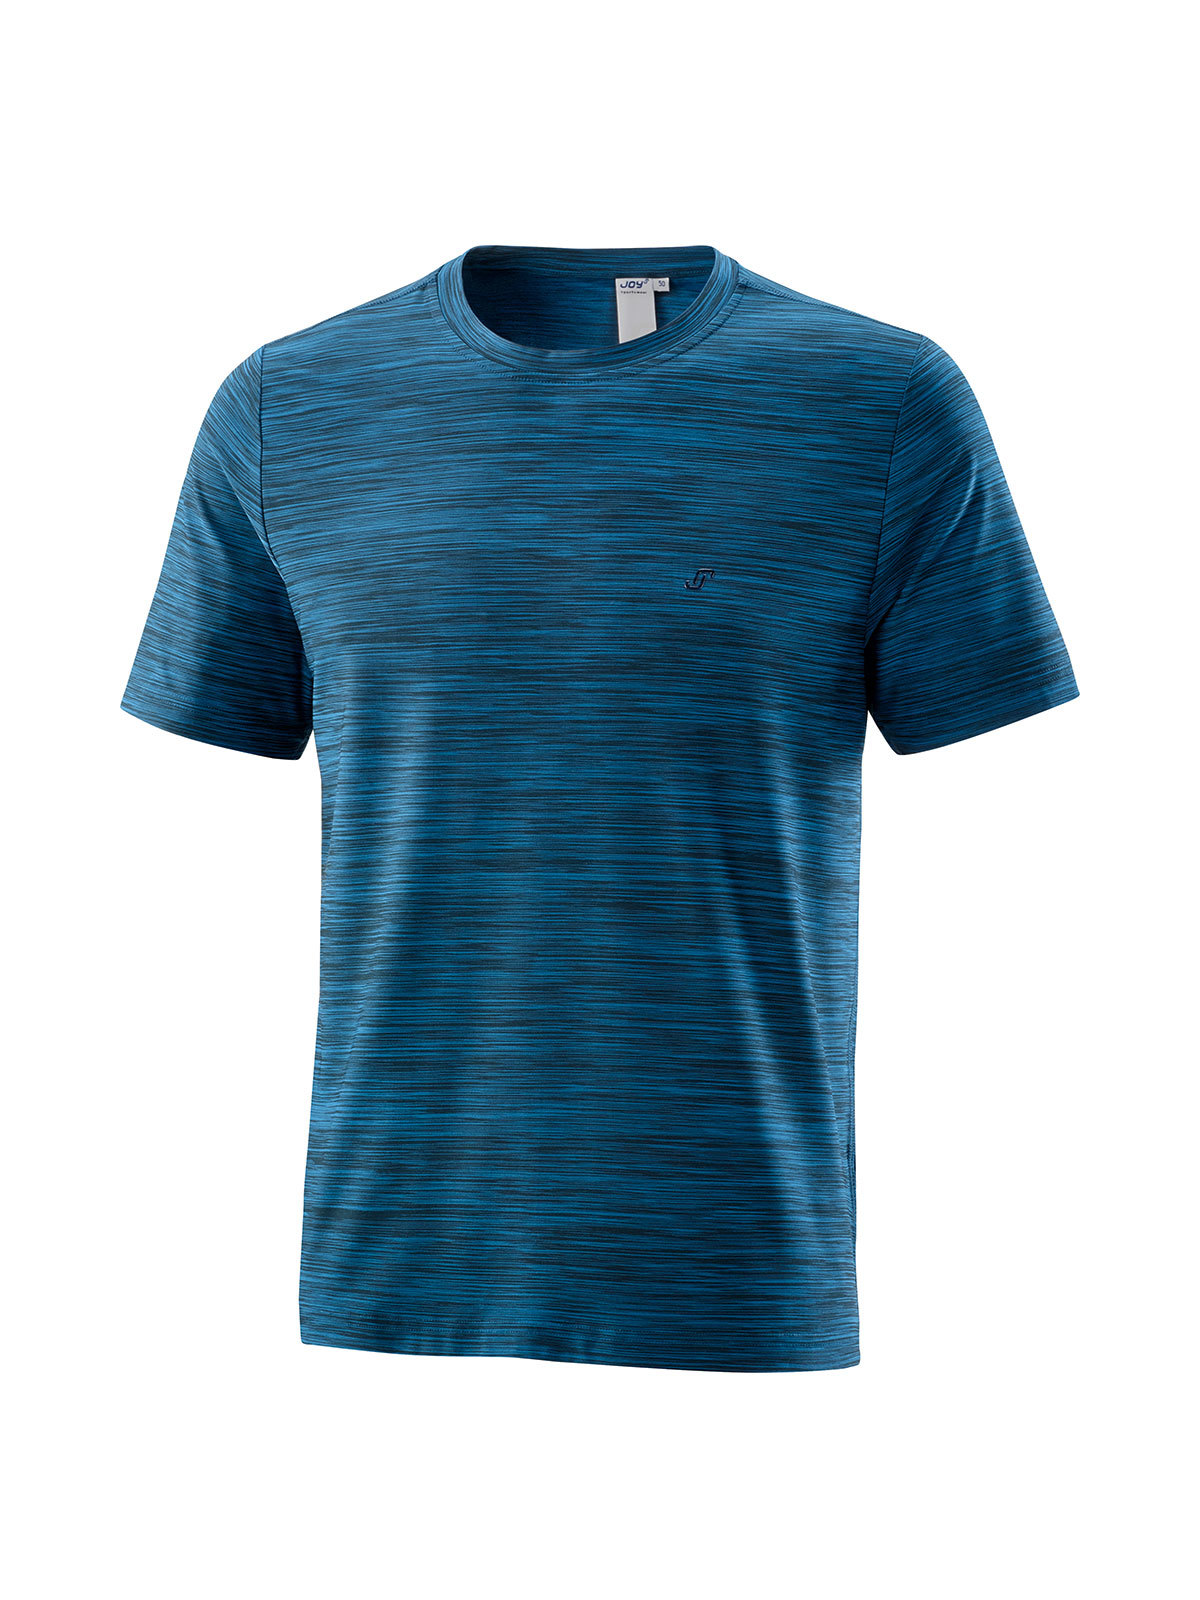 Baltic Melange UVP 40€ JOY sportswear VITUS Herren T-Shirt